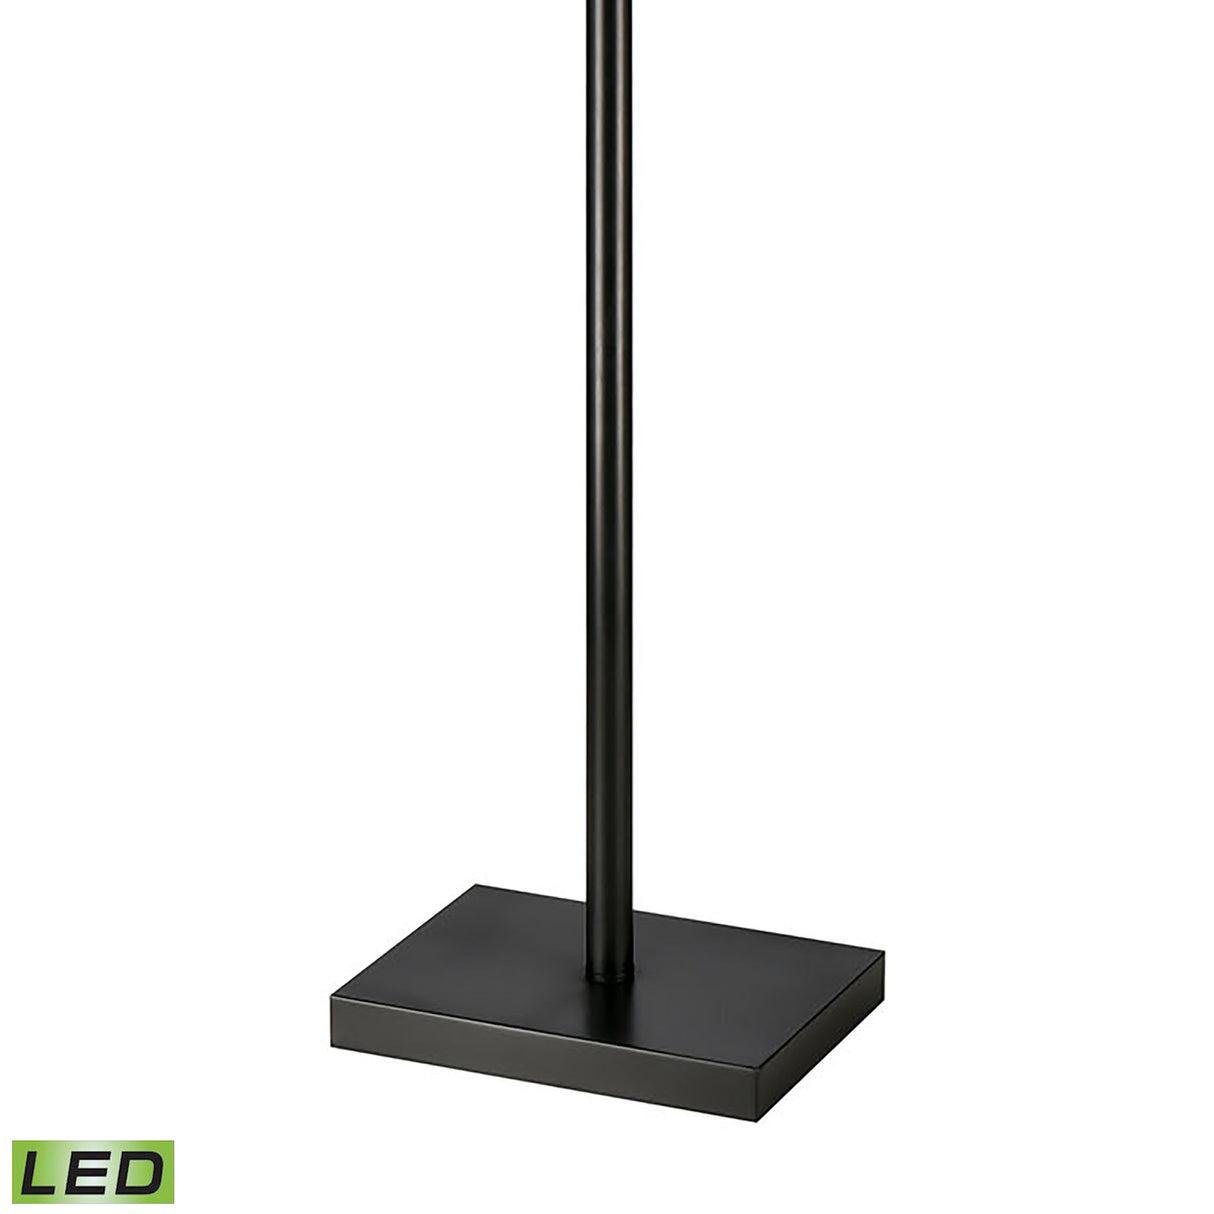 Elk H019-7224-LED Staffa 62'' High 1-Light Floor Lamp - Matte Black - Includes LED Bulb